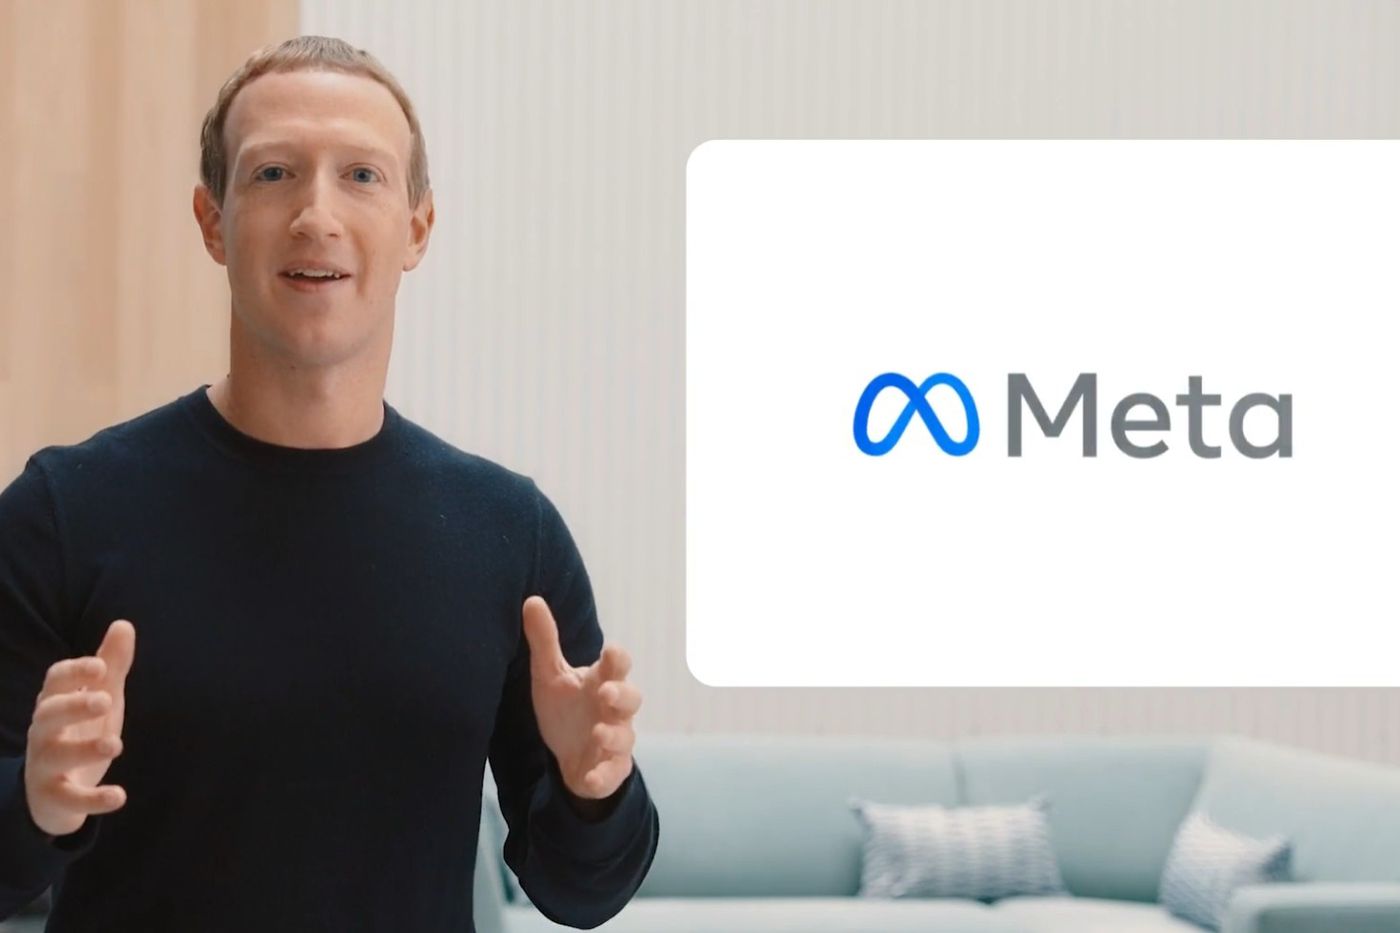 Facebook's new name is Meta Mark Zuckerberg